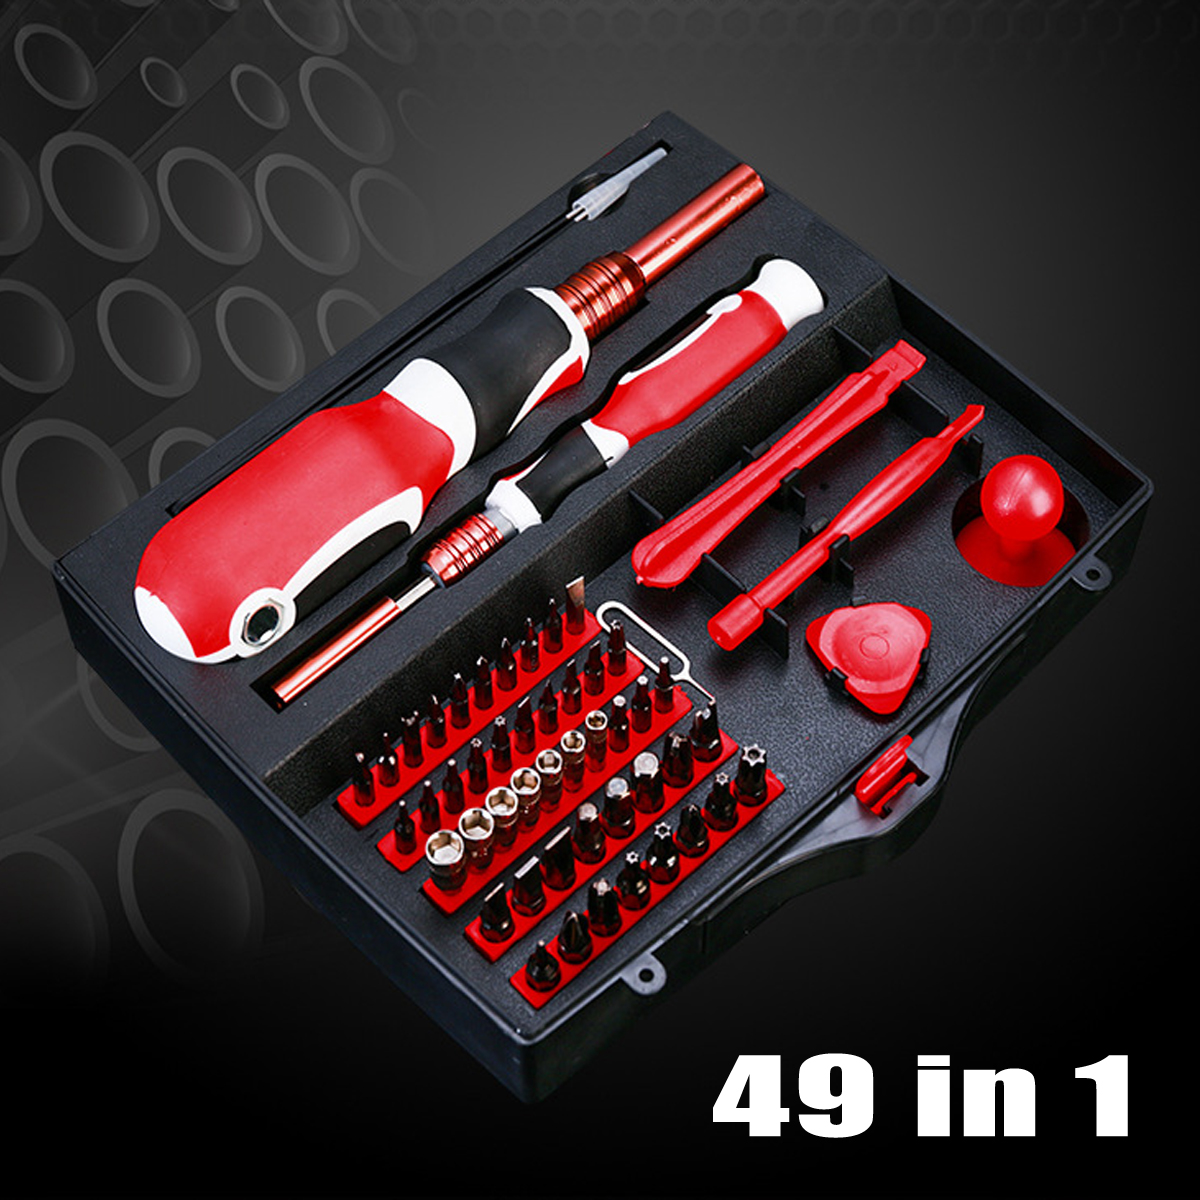 Multi-purpose-Insulation-Screwdrivers-Repairing-Tools-Kit-Ergonomic-Handle-1286261-2